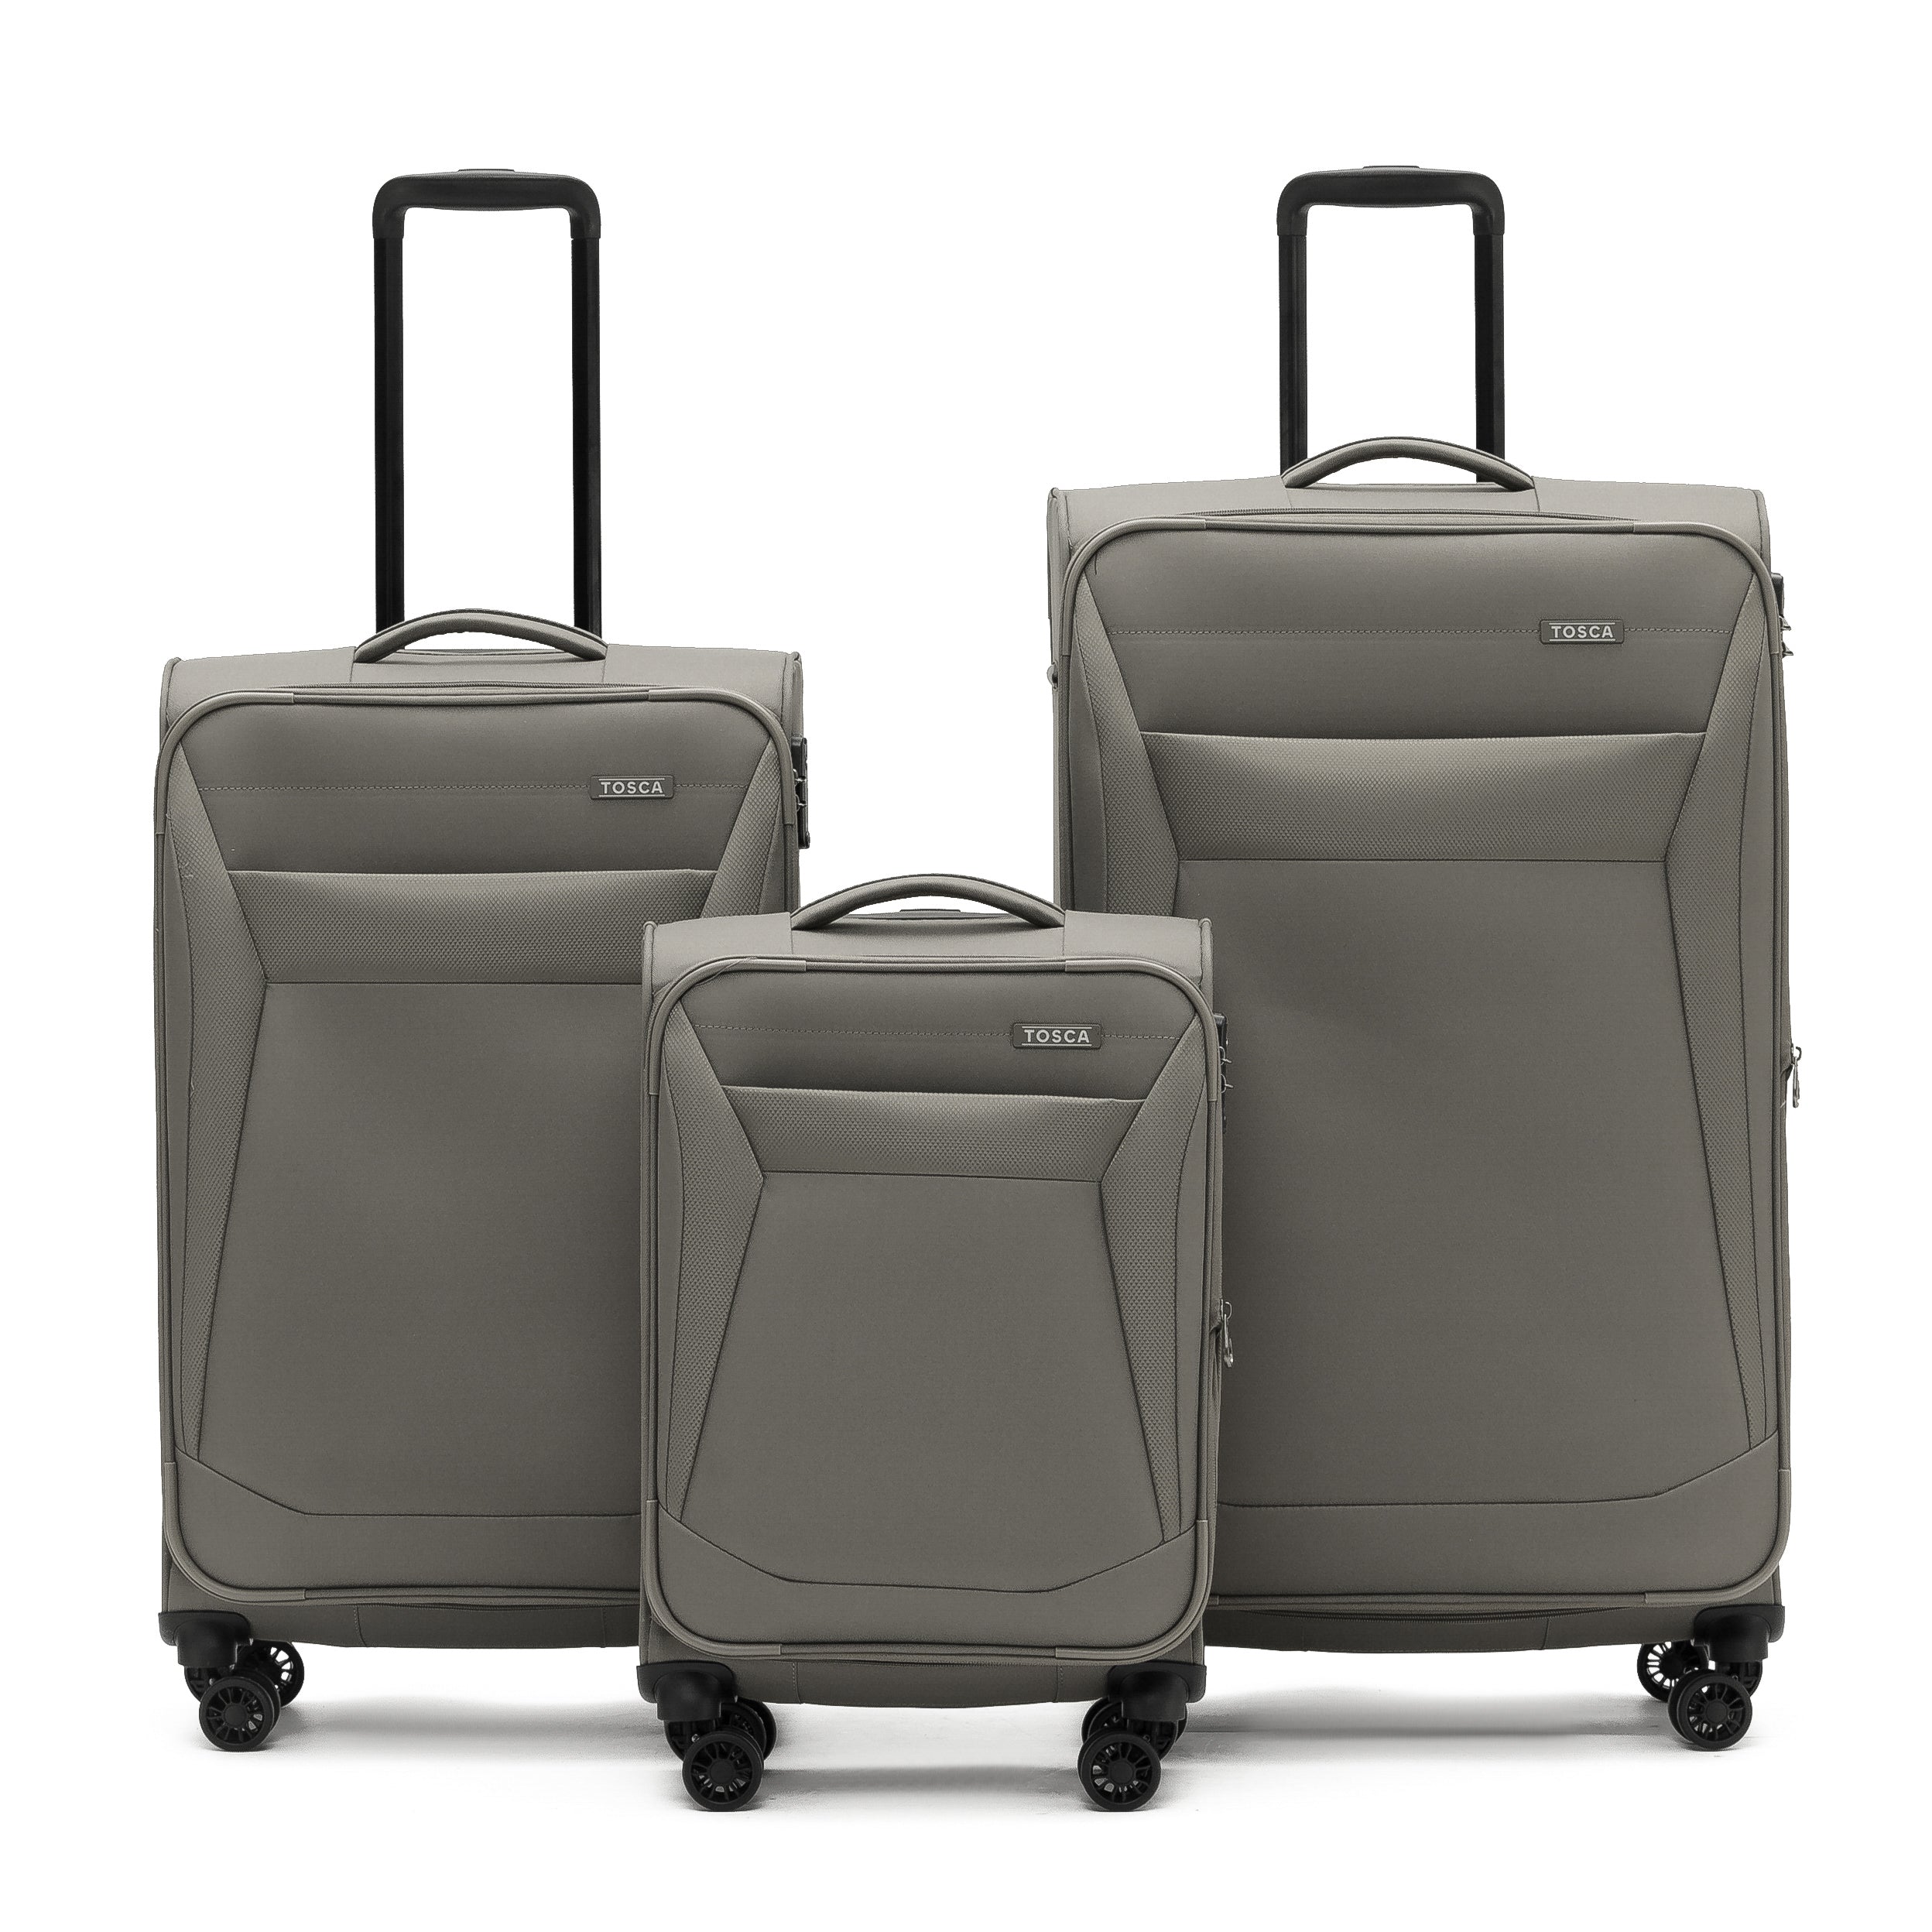 Tosca - Aviator 2.0 set of 3 suitcases (L-M-S) - Khaki